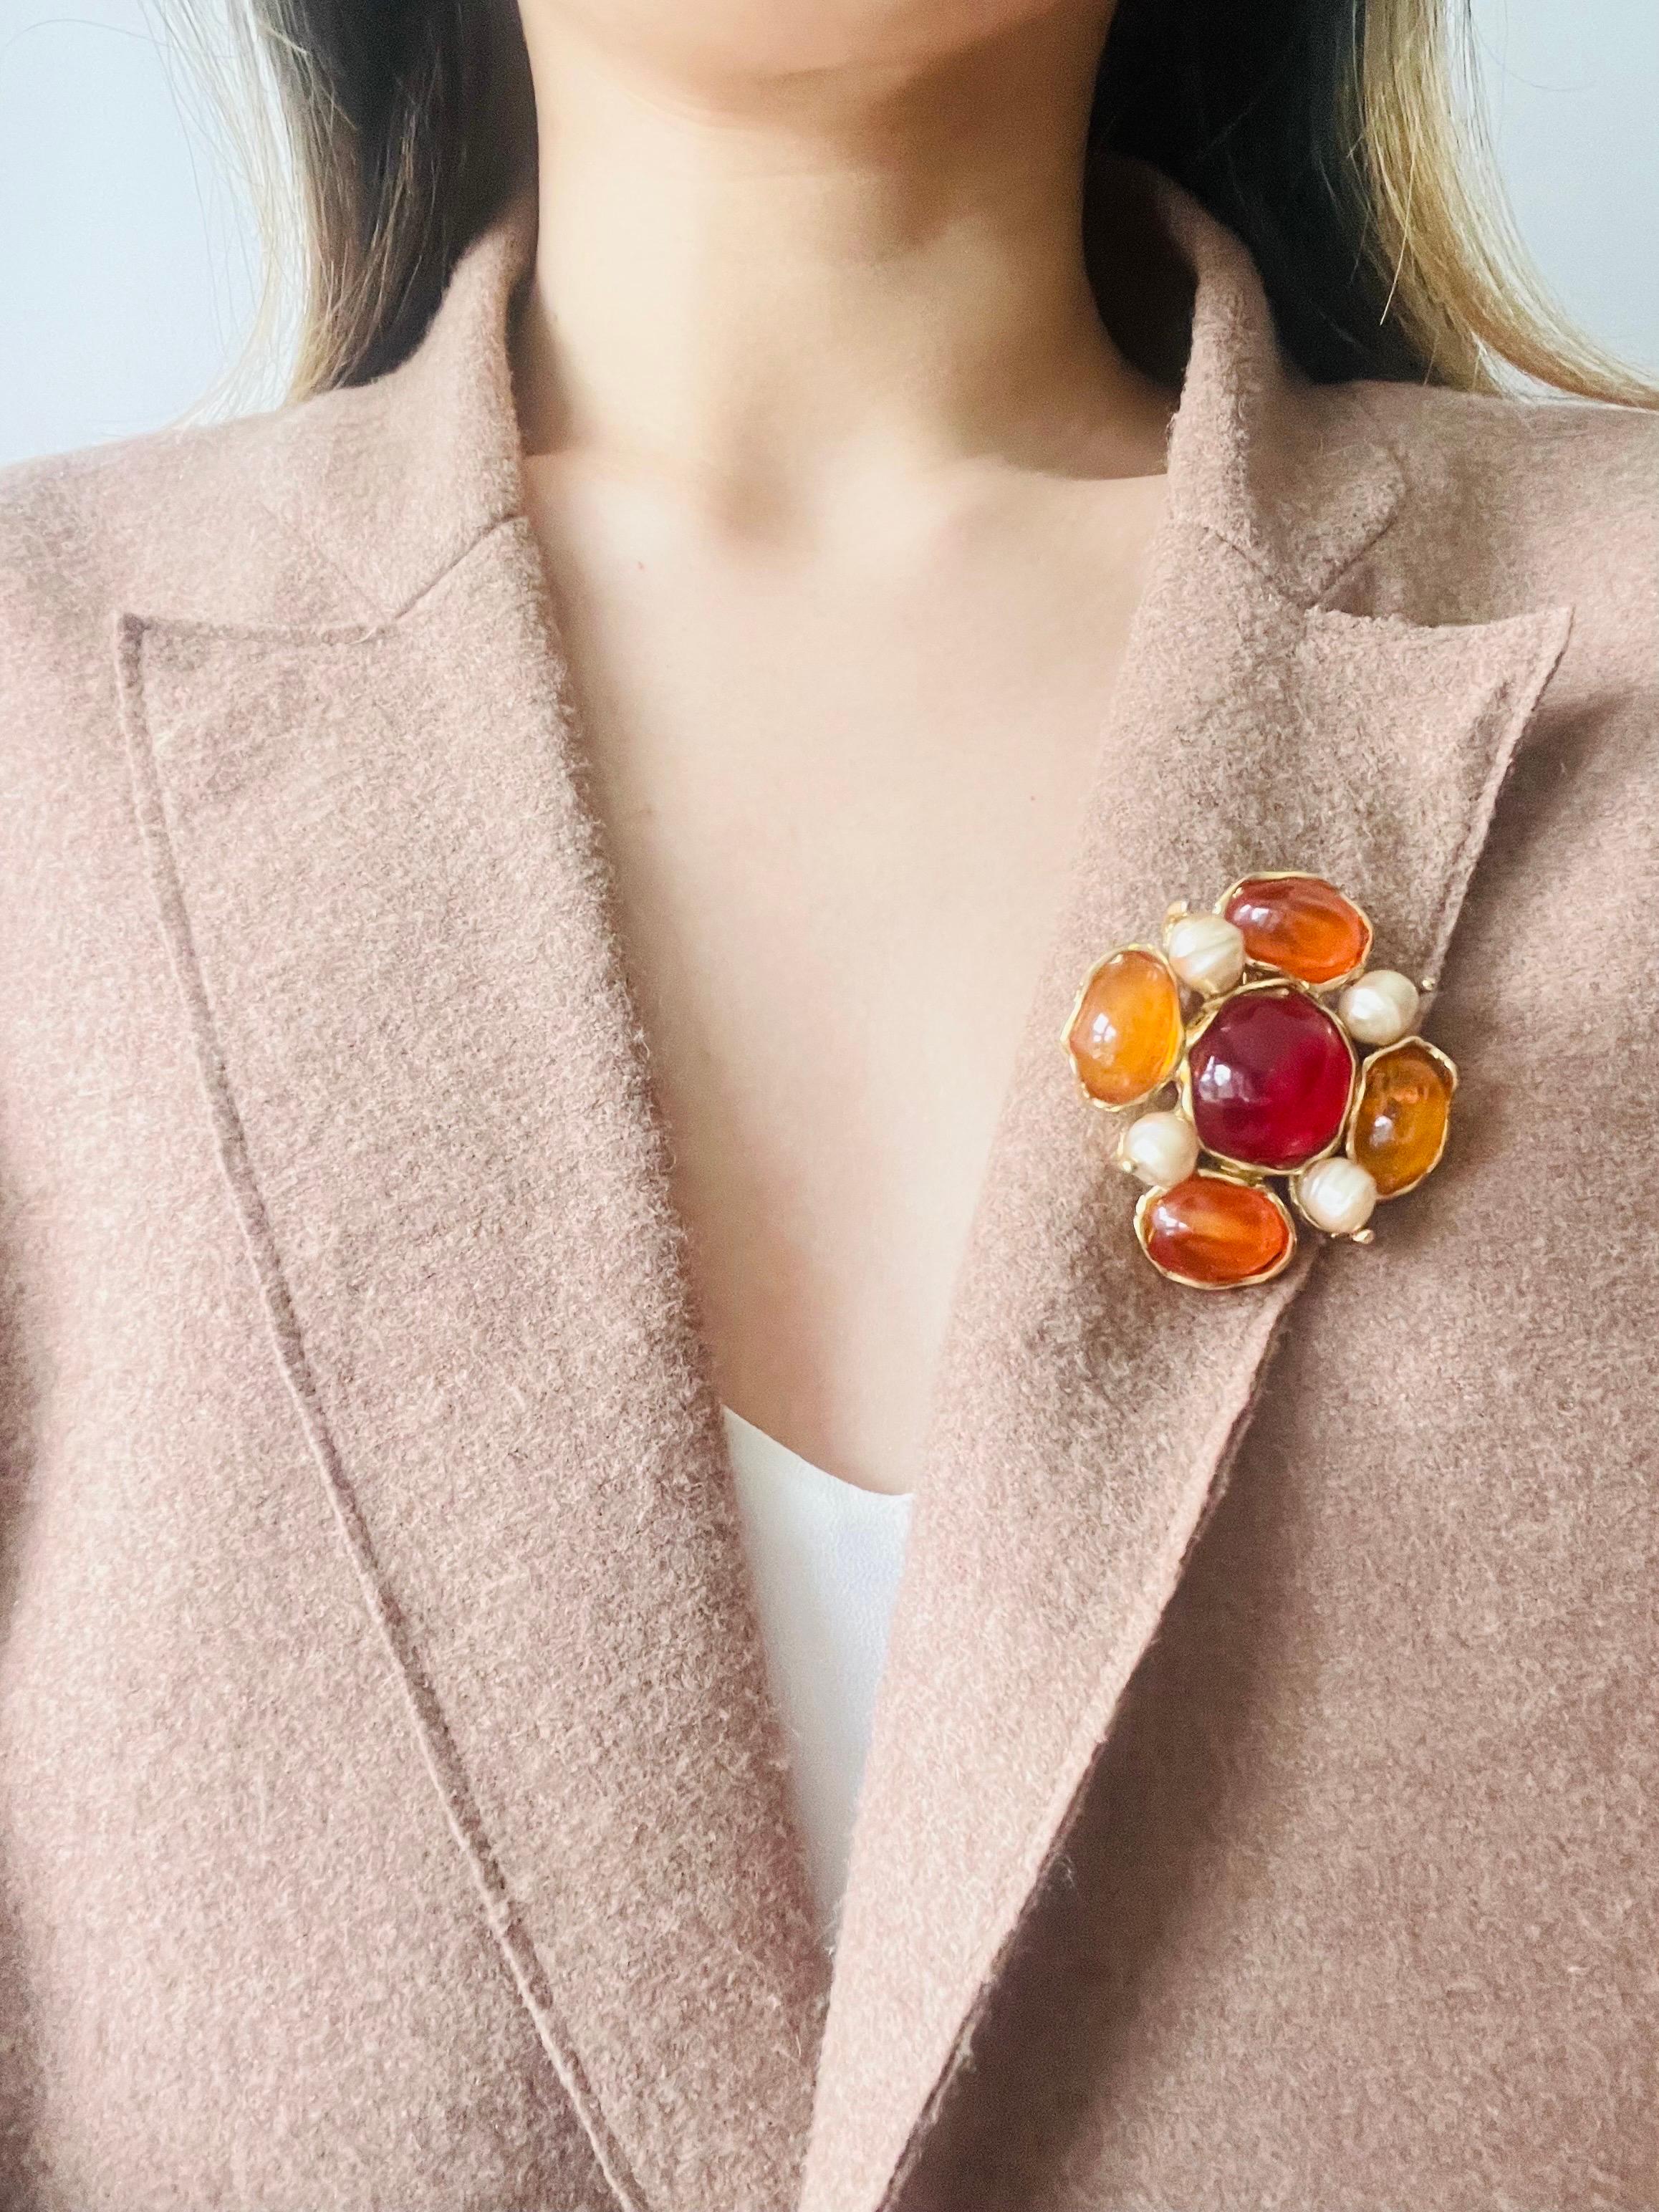  Yves Saint Laurent YSL Grande broche pendentif Gripoix orange rubis cristaux perles Unisexe 